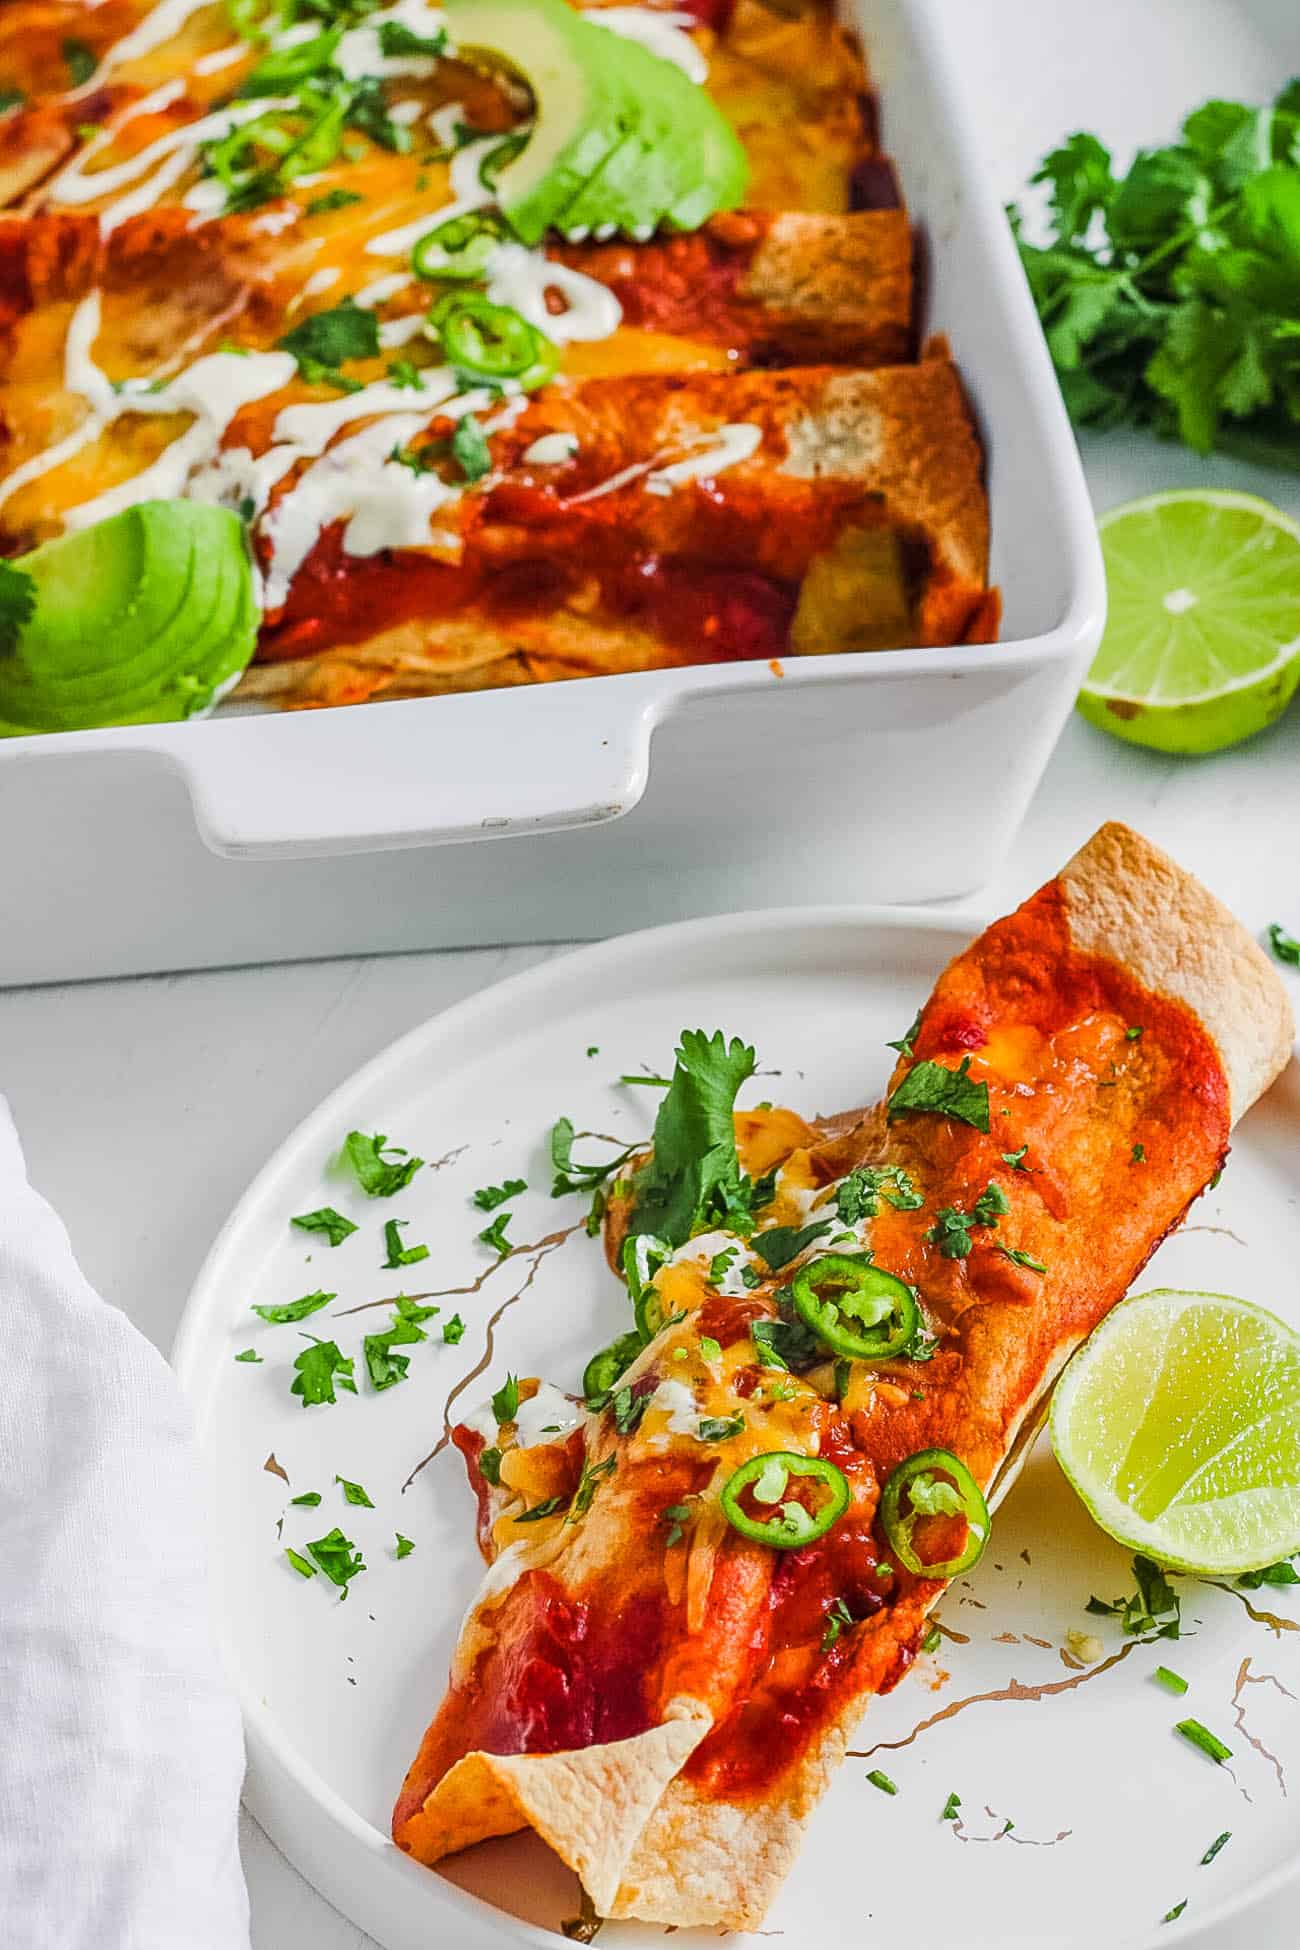 easy healthy low carb keto enchiladas recipe - single enchilada on a plate